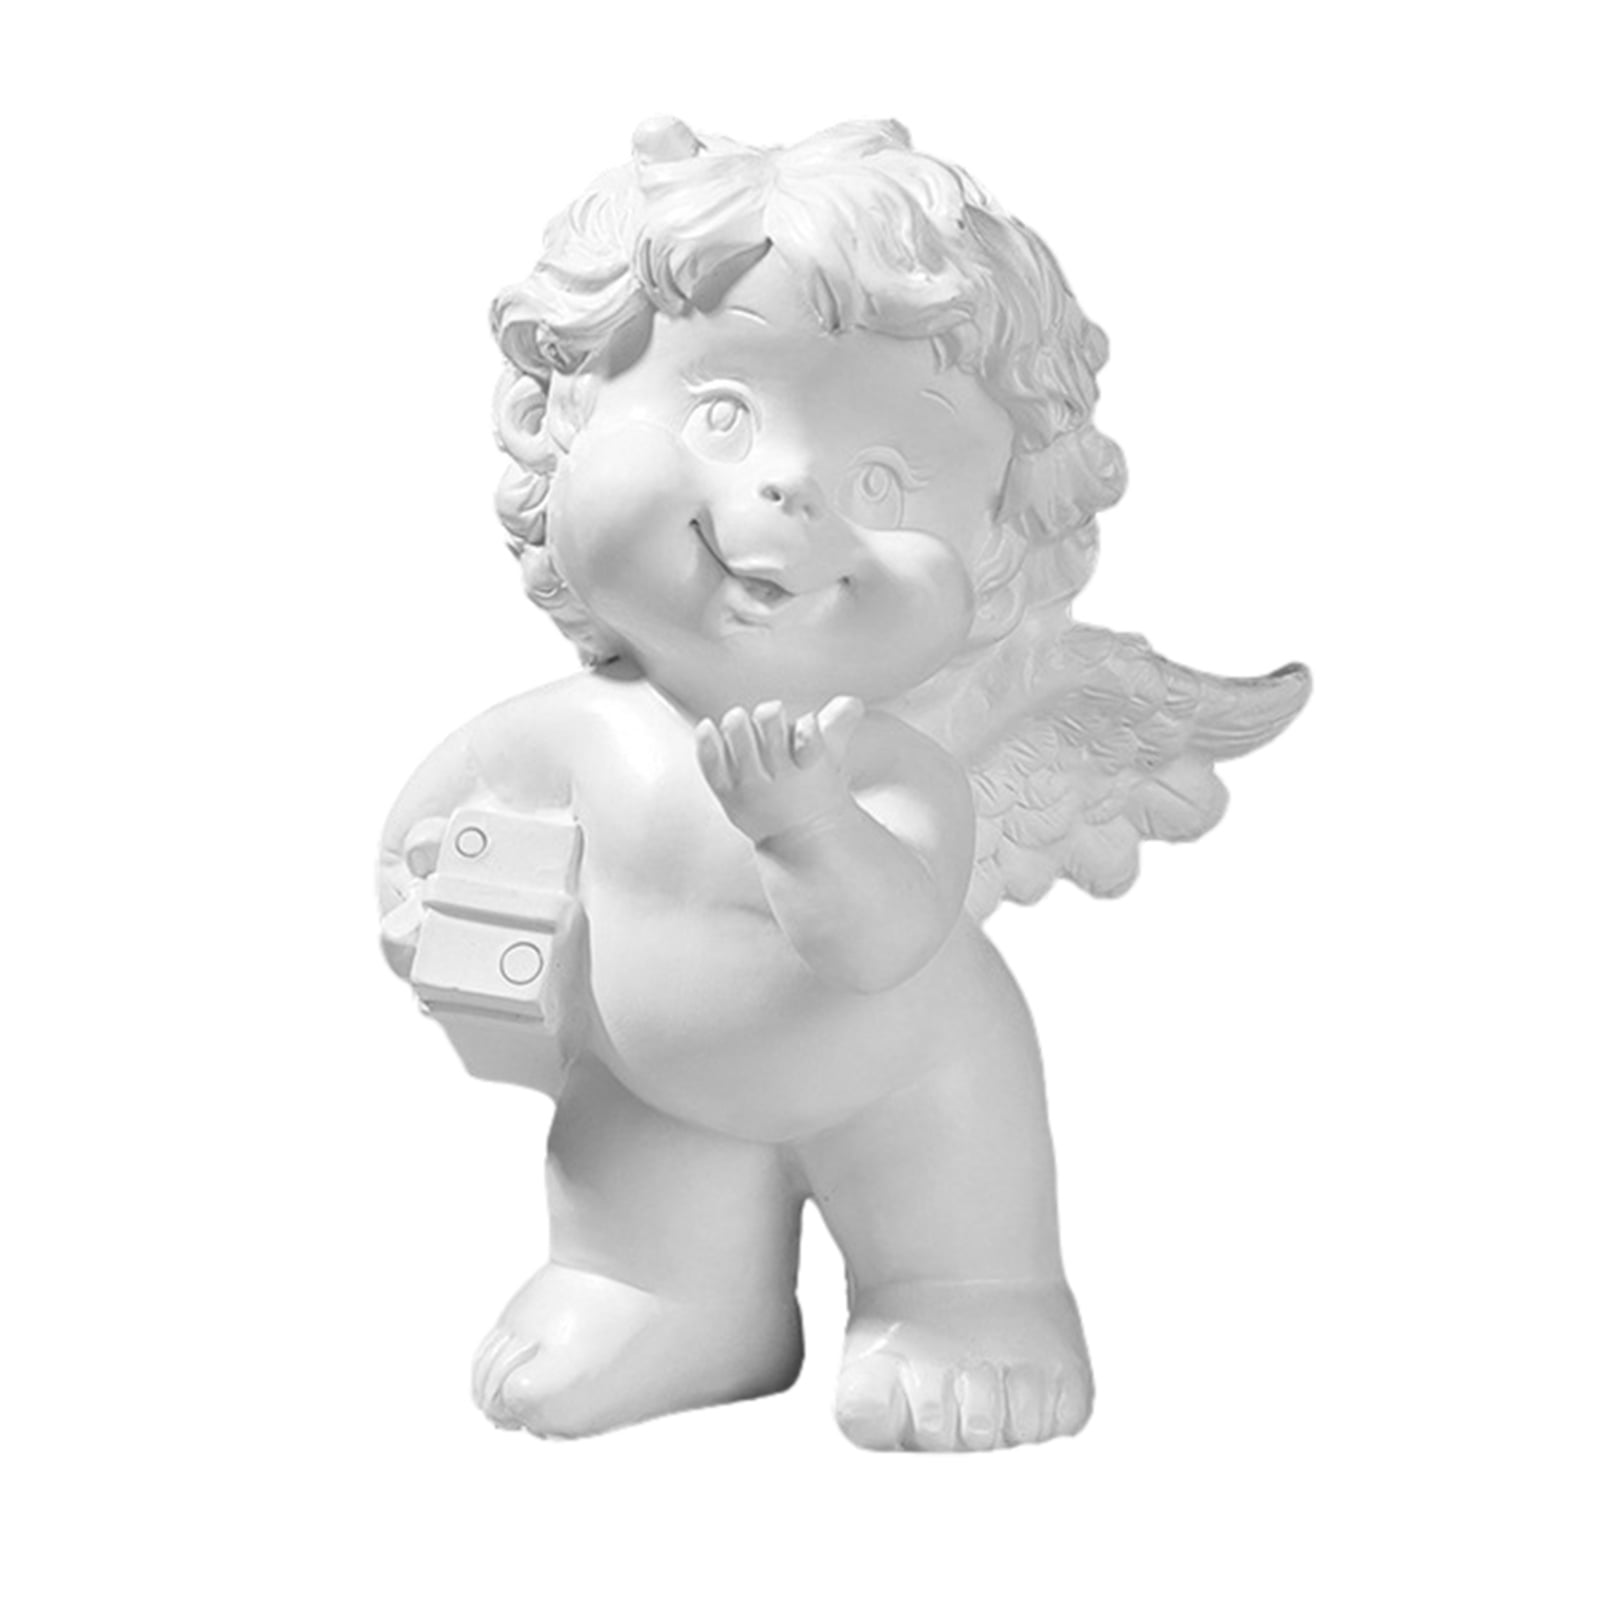 Vintage retro cherub baby on scale  ornament figurine  figure collectibles gift home decor